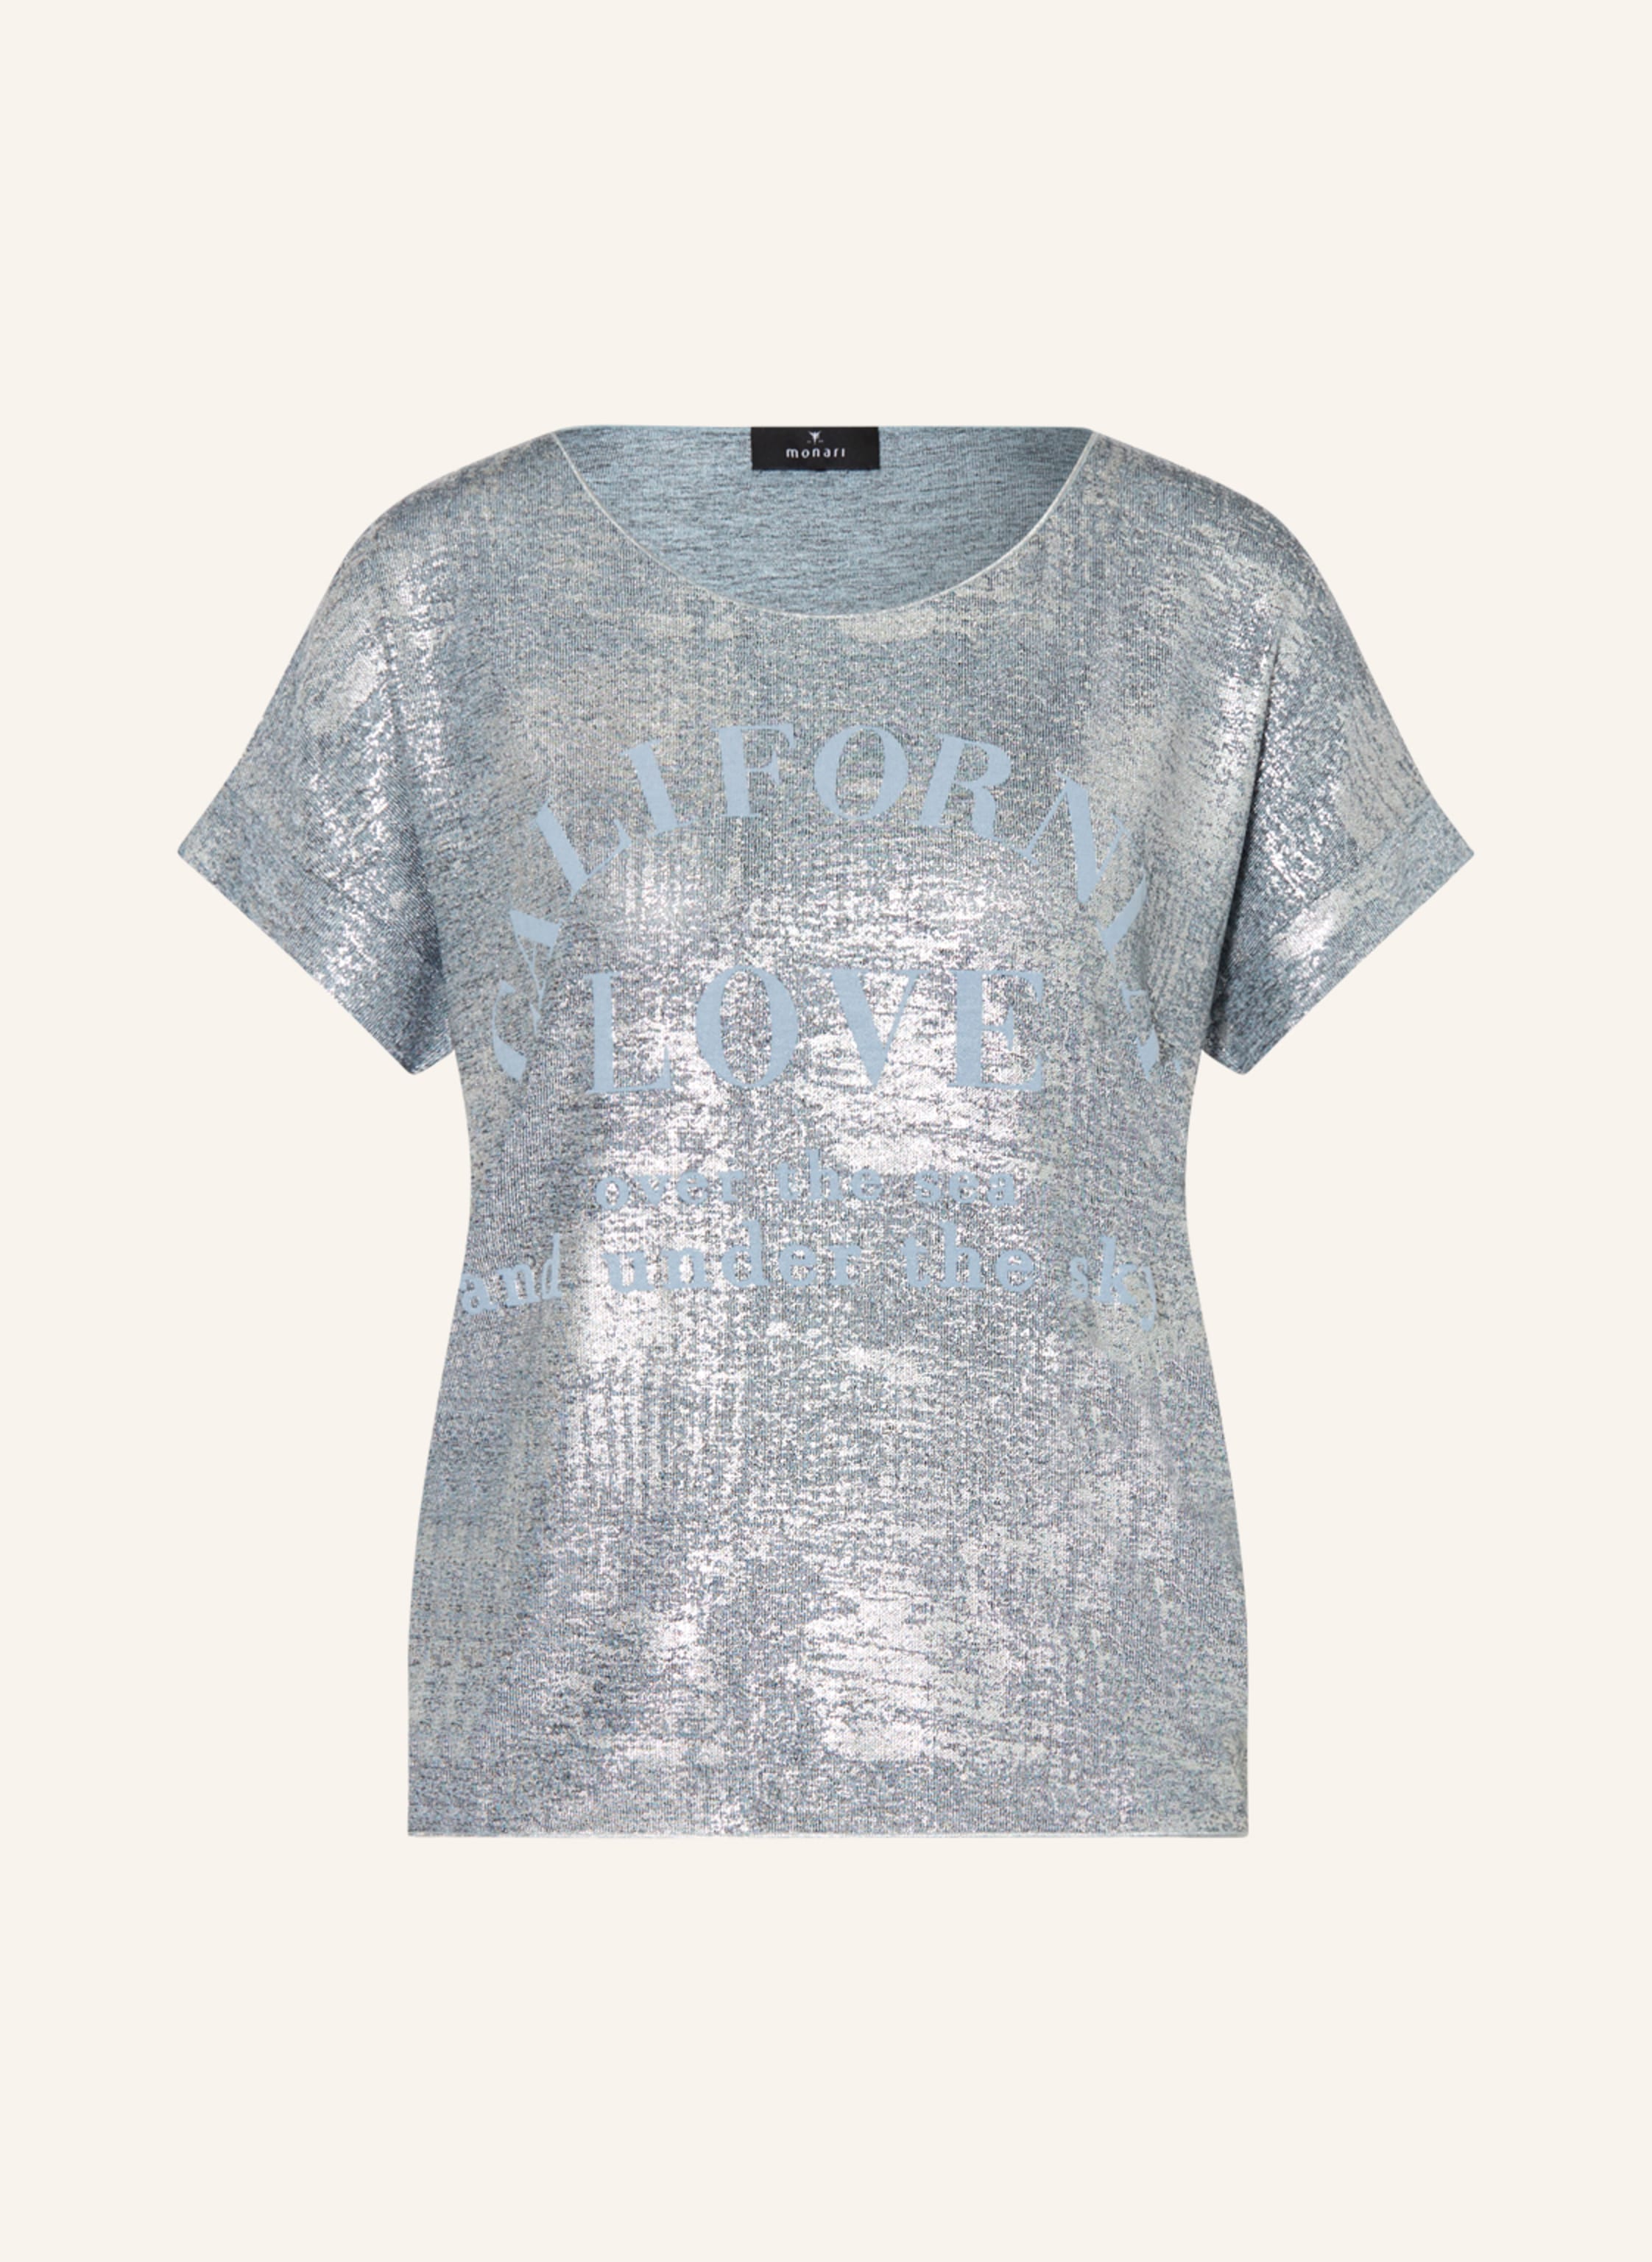 monari T-Shirt mit blaugrau/ in Glitzergarn silber